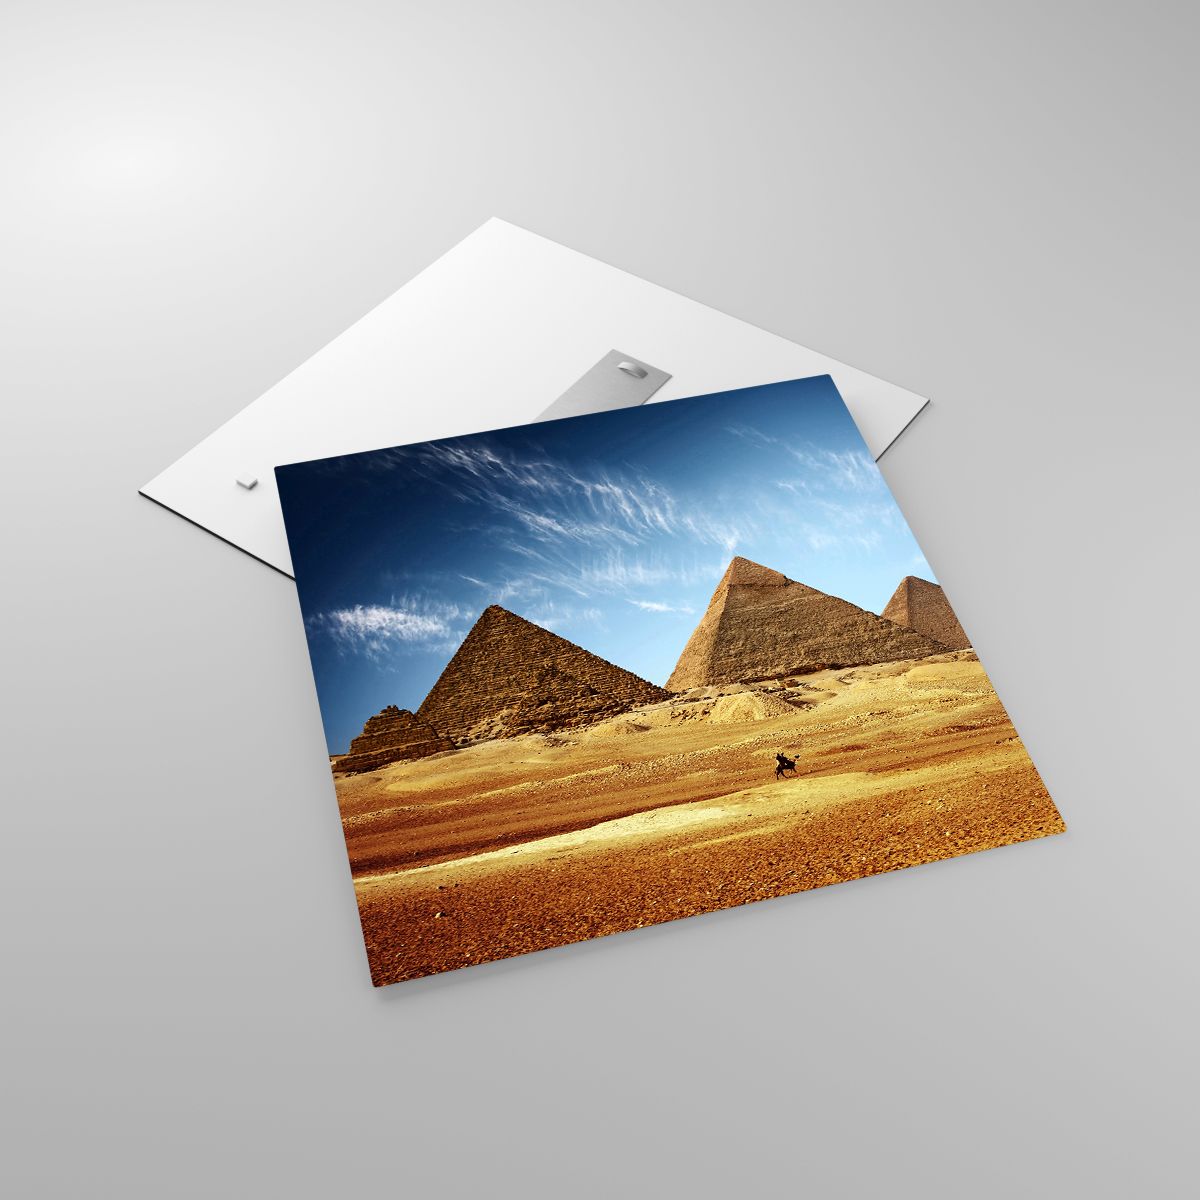 Cuadro Pirámides, Cuadro Arquitectura, Cuadro Paisaje, Cuadro Egipto, Cuadro Desierto